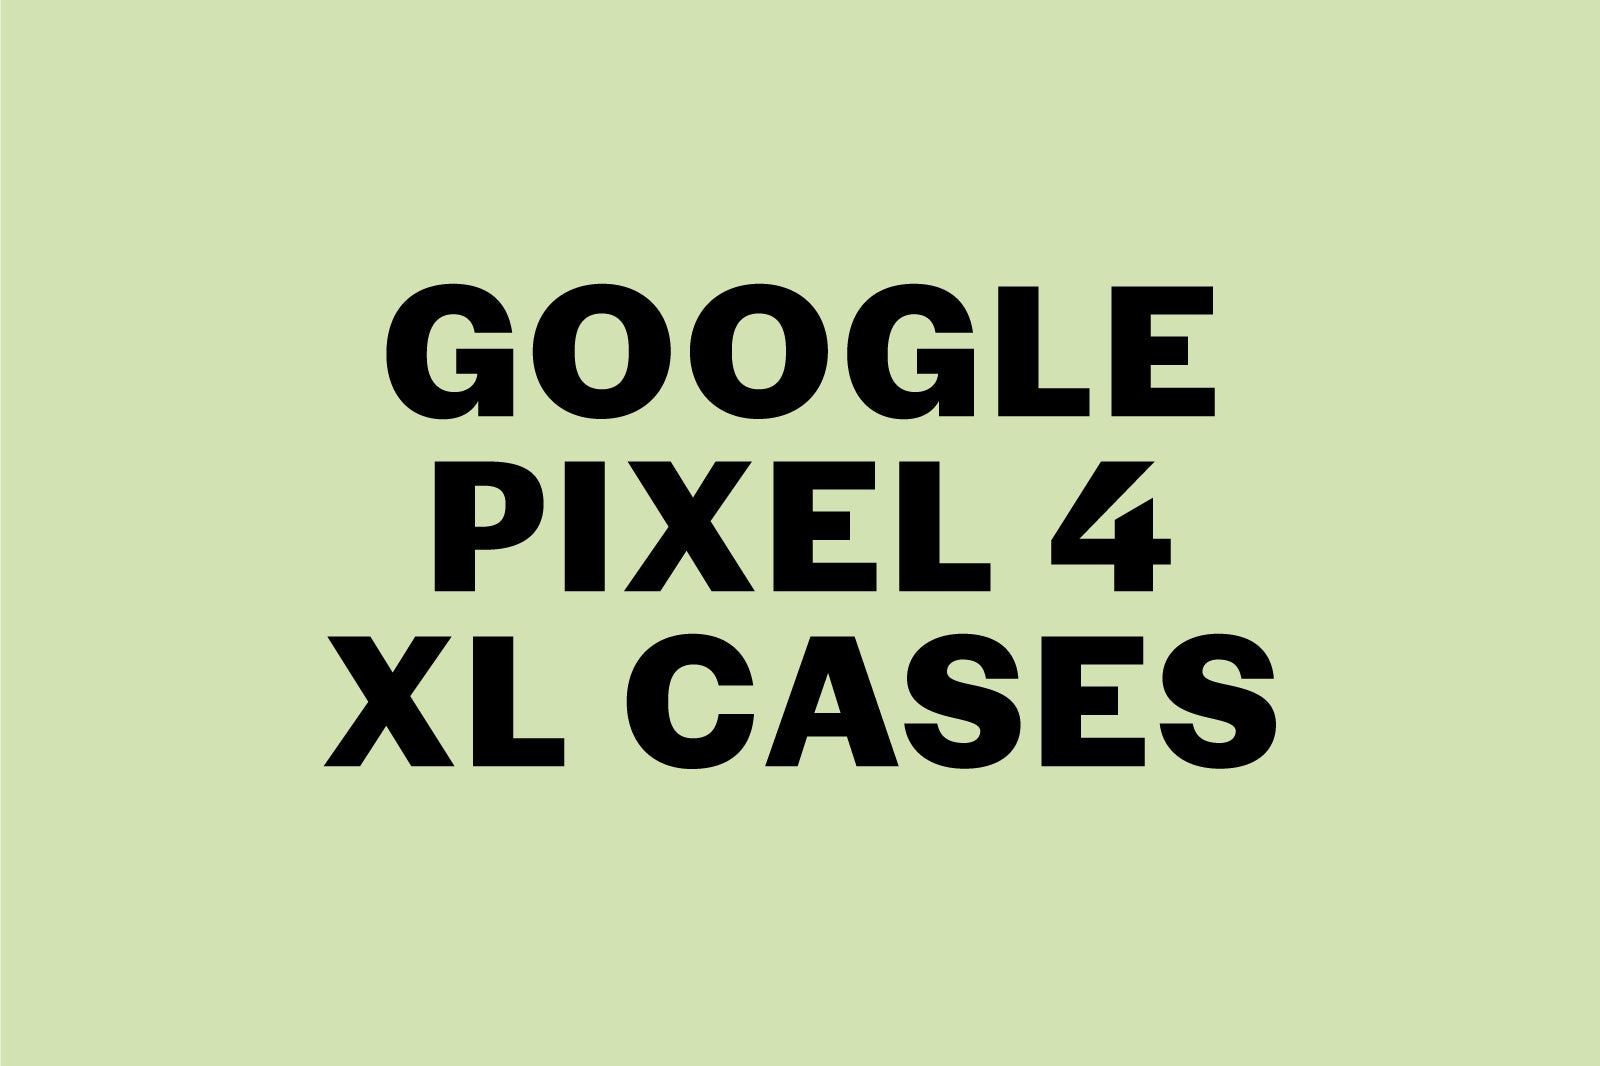 Google Pixel 4 XL Cases